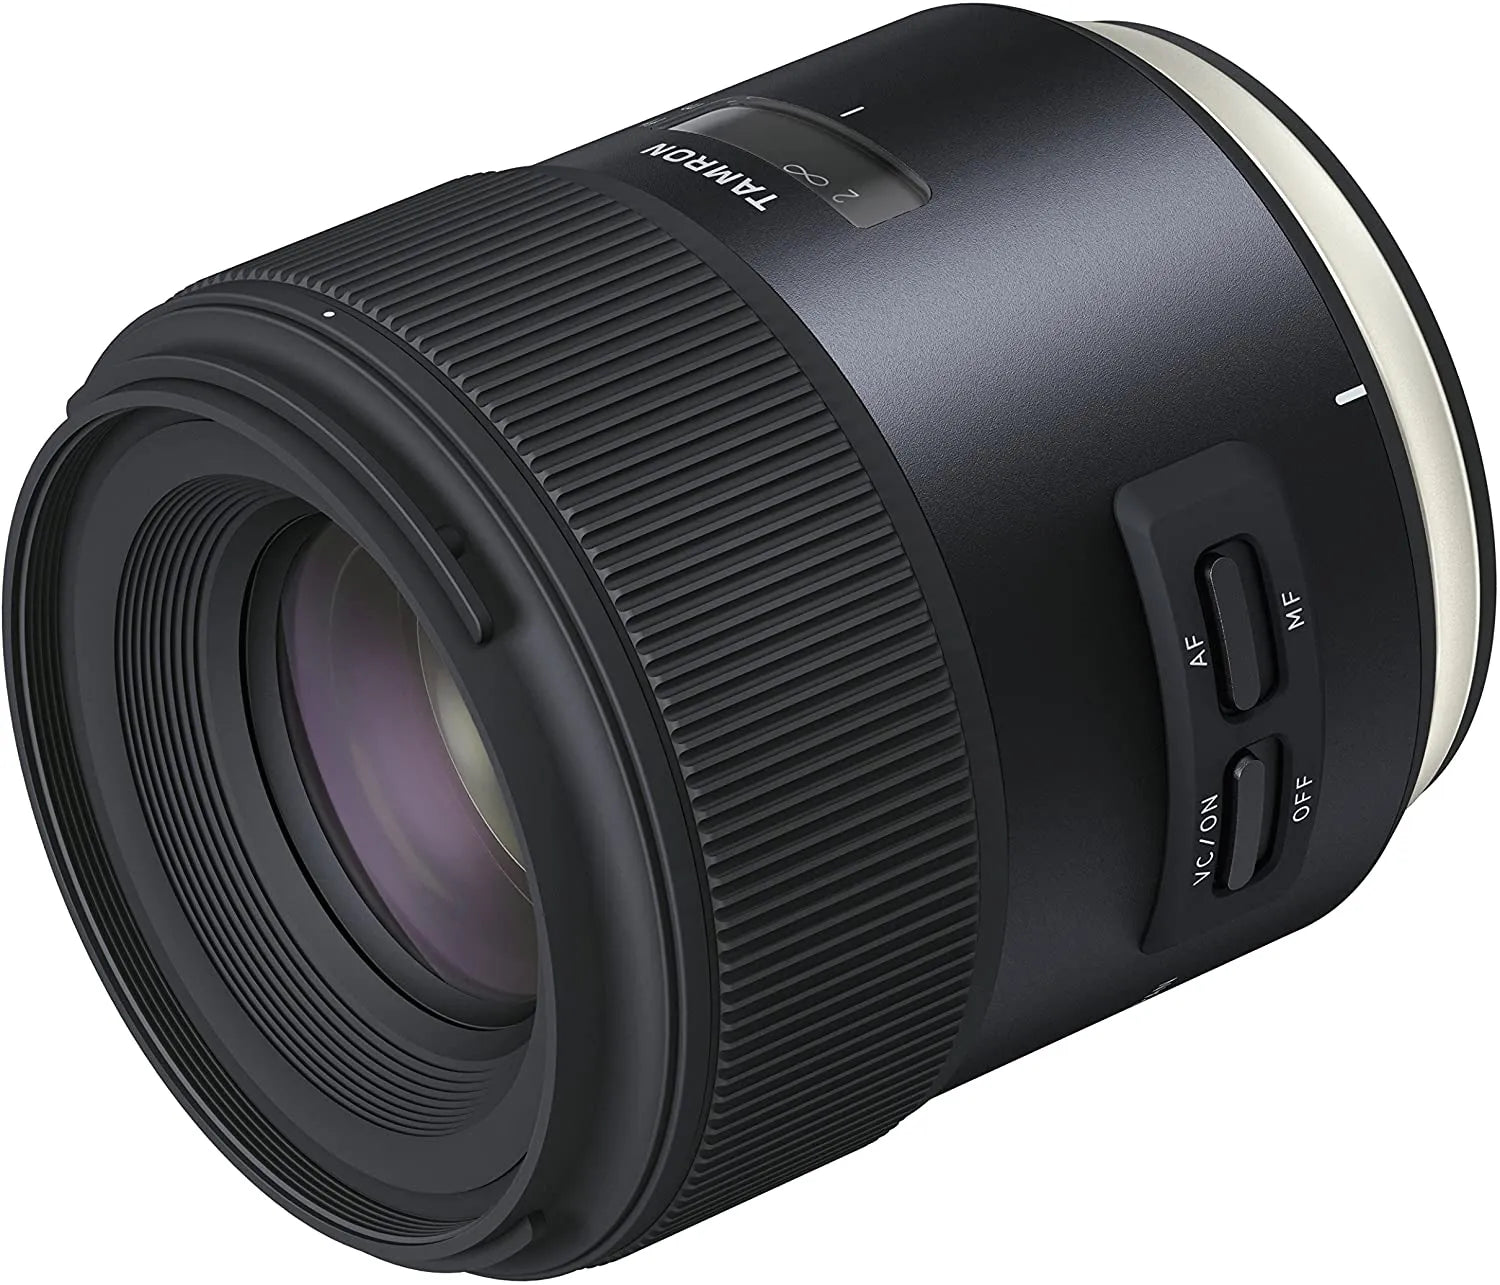 Tamron 45MM DI VC F1.8 USD Lens for Canon